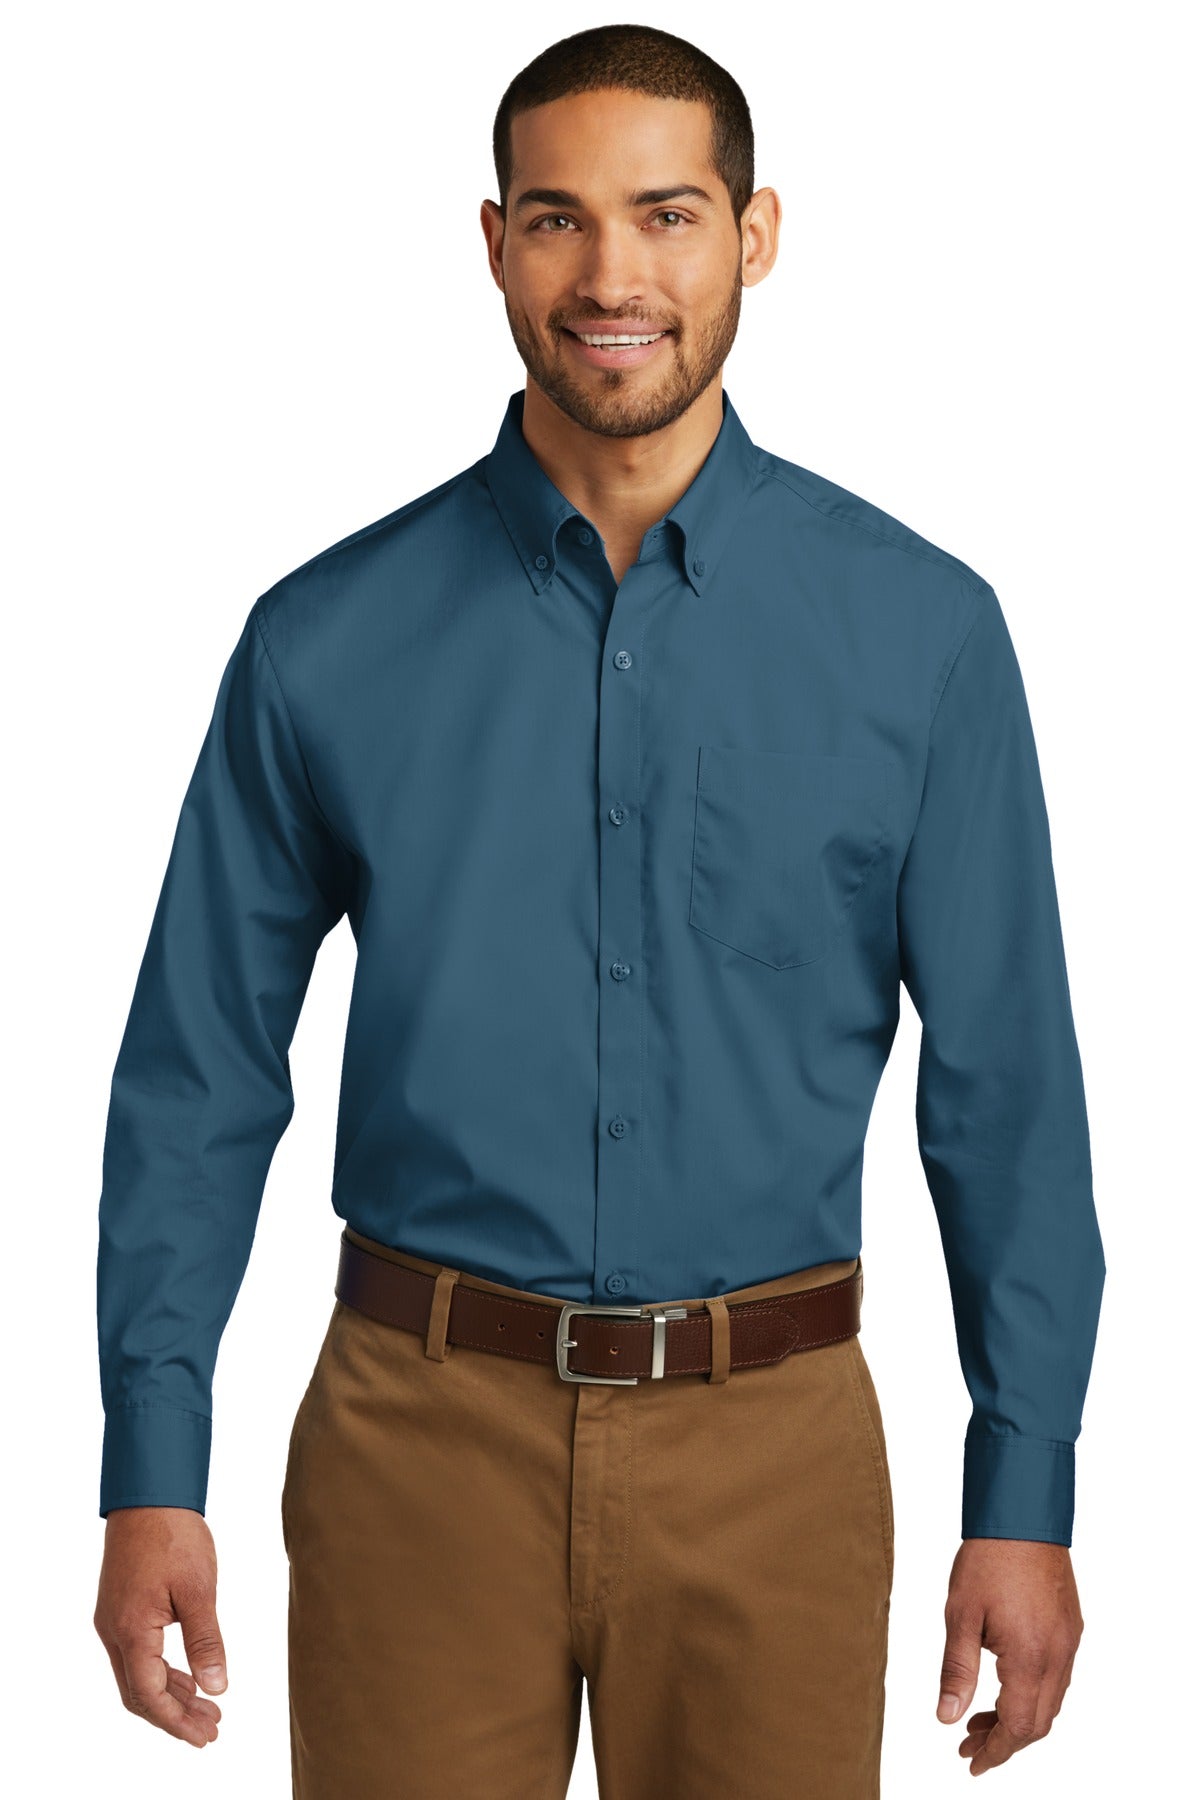 Port Authority® Long Sleeve Carefree Poplin Shirt. W100 [Dusty Blue] - DFW Impression